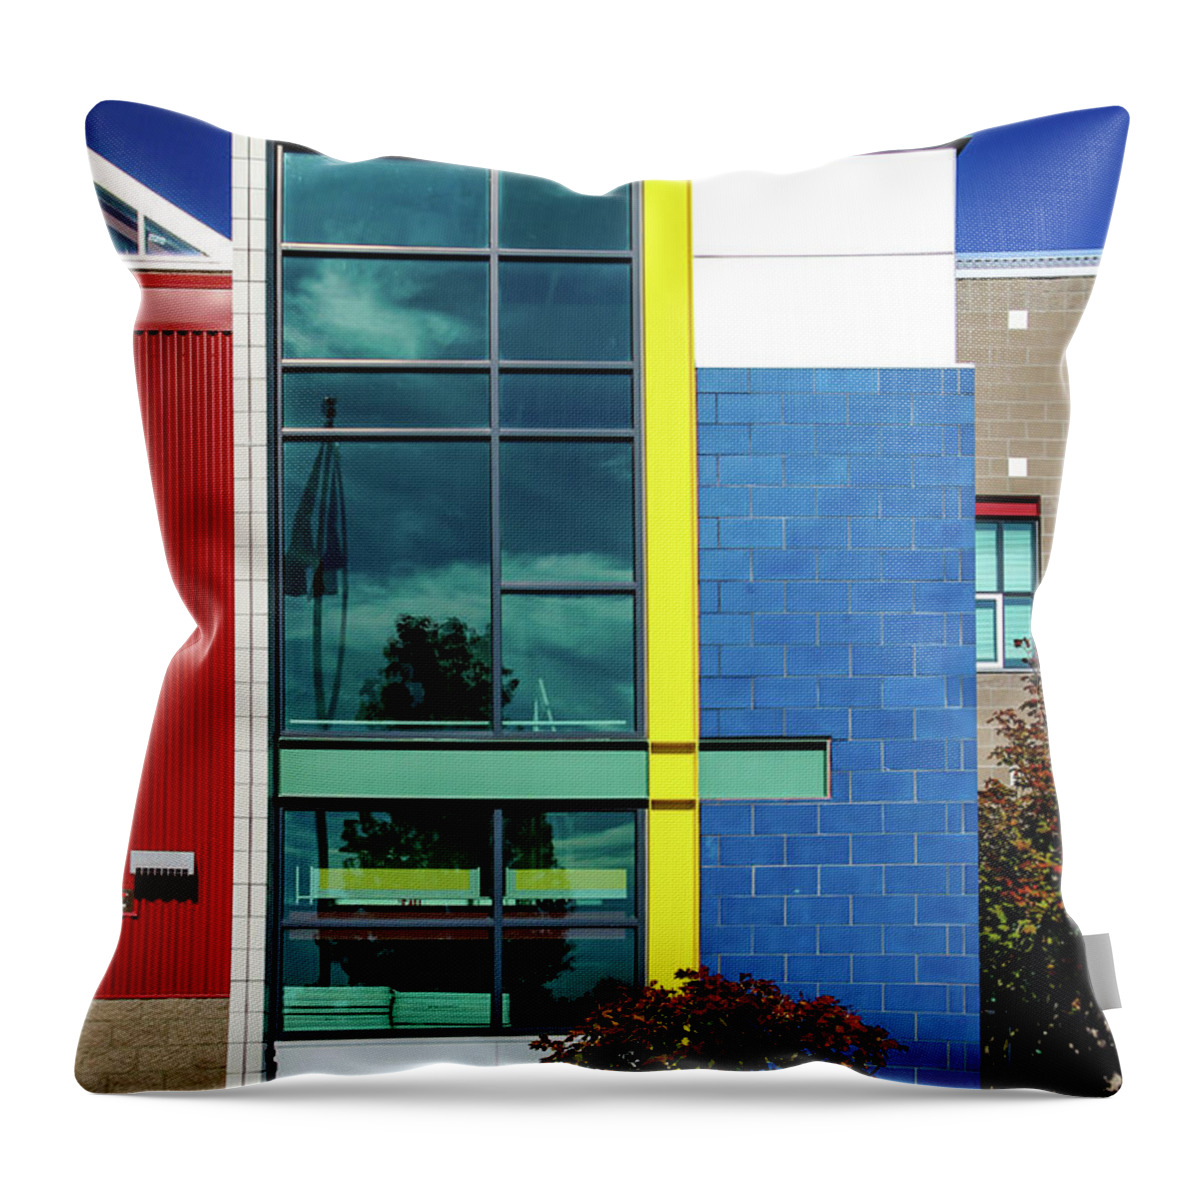 Facade Throw Pillow featuring the photograph Wall Facade Architectural Abstract by Aashish Vaidya